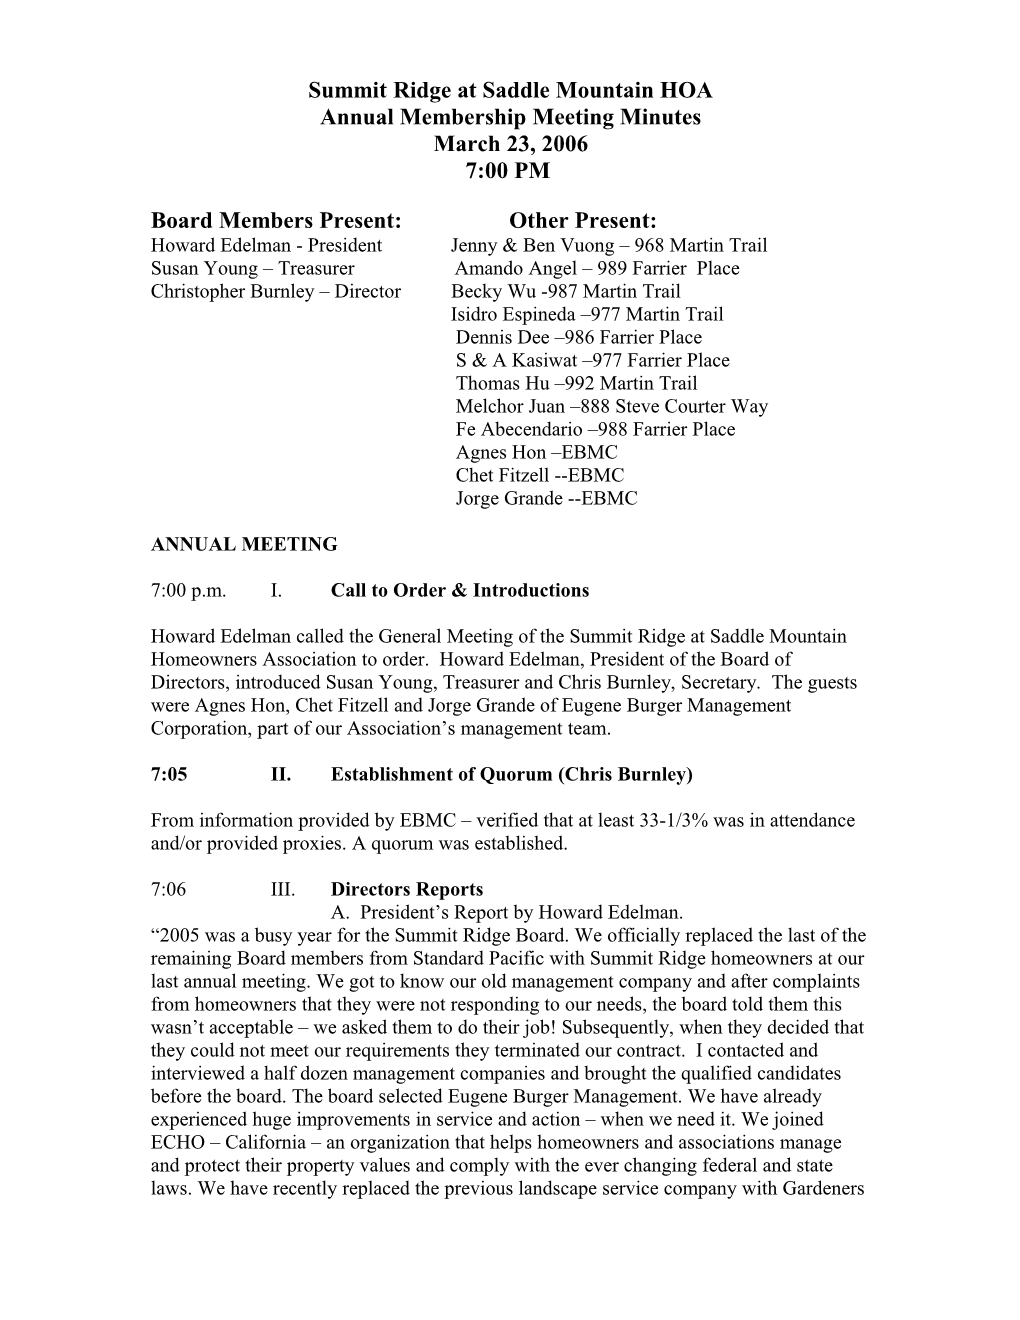 Minutes of General Meeting - Summit Ridge - March 23, 2006